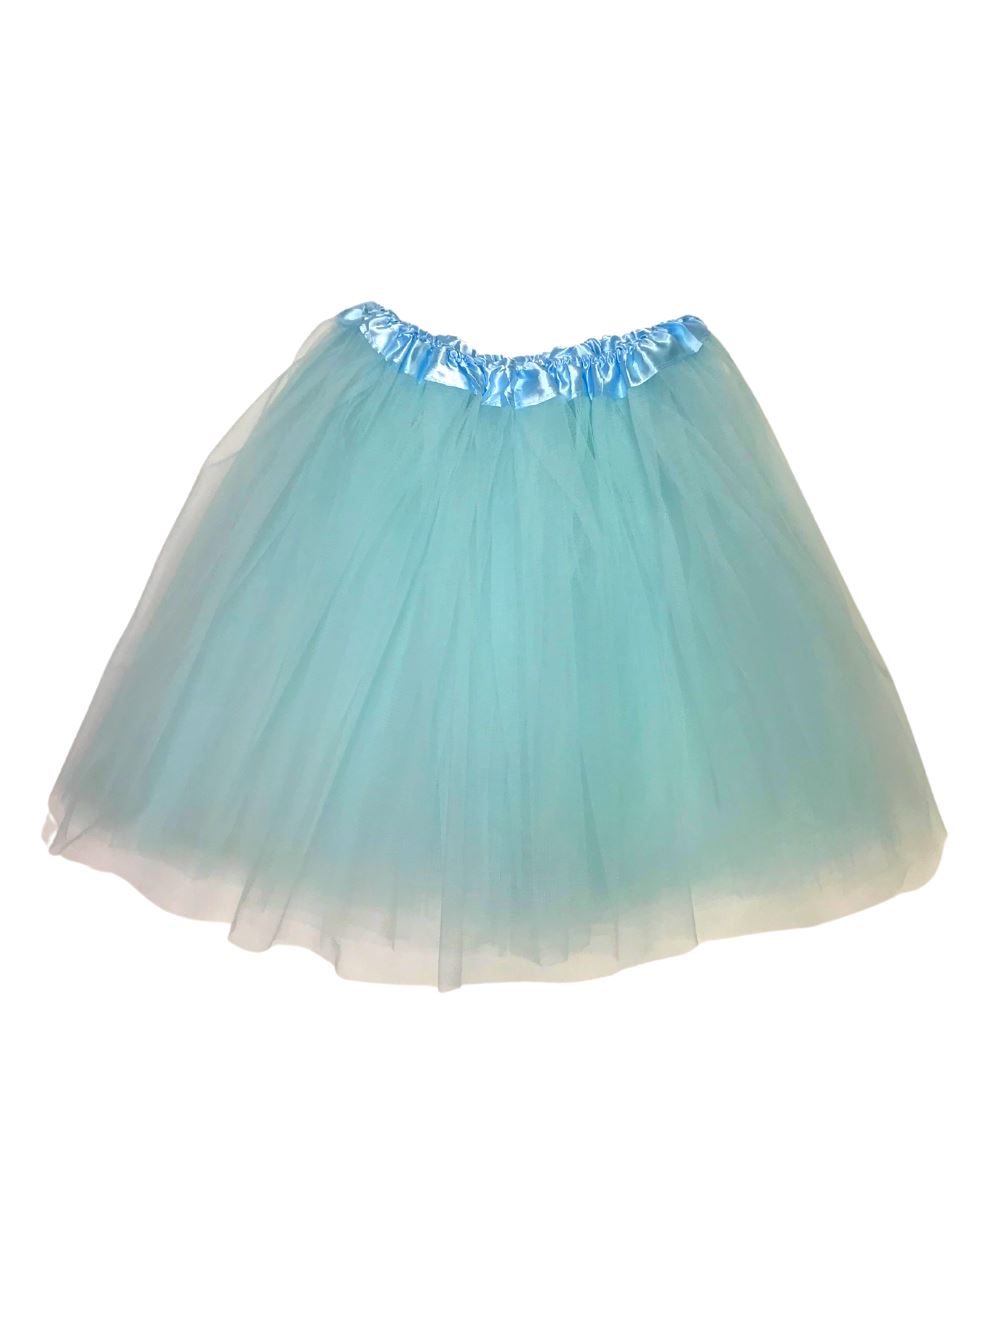 Light Aqua Blue Adult Tutu Skirt - Women's Size 3-Layer Basic Ballet Costume Dance Tutus - Sydney So Sweet